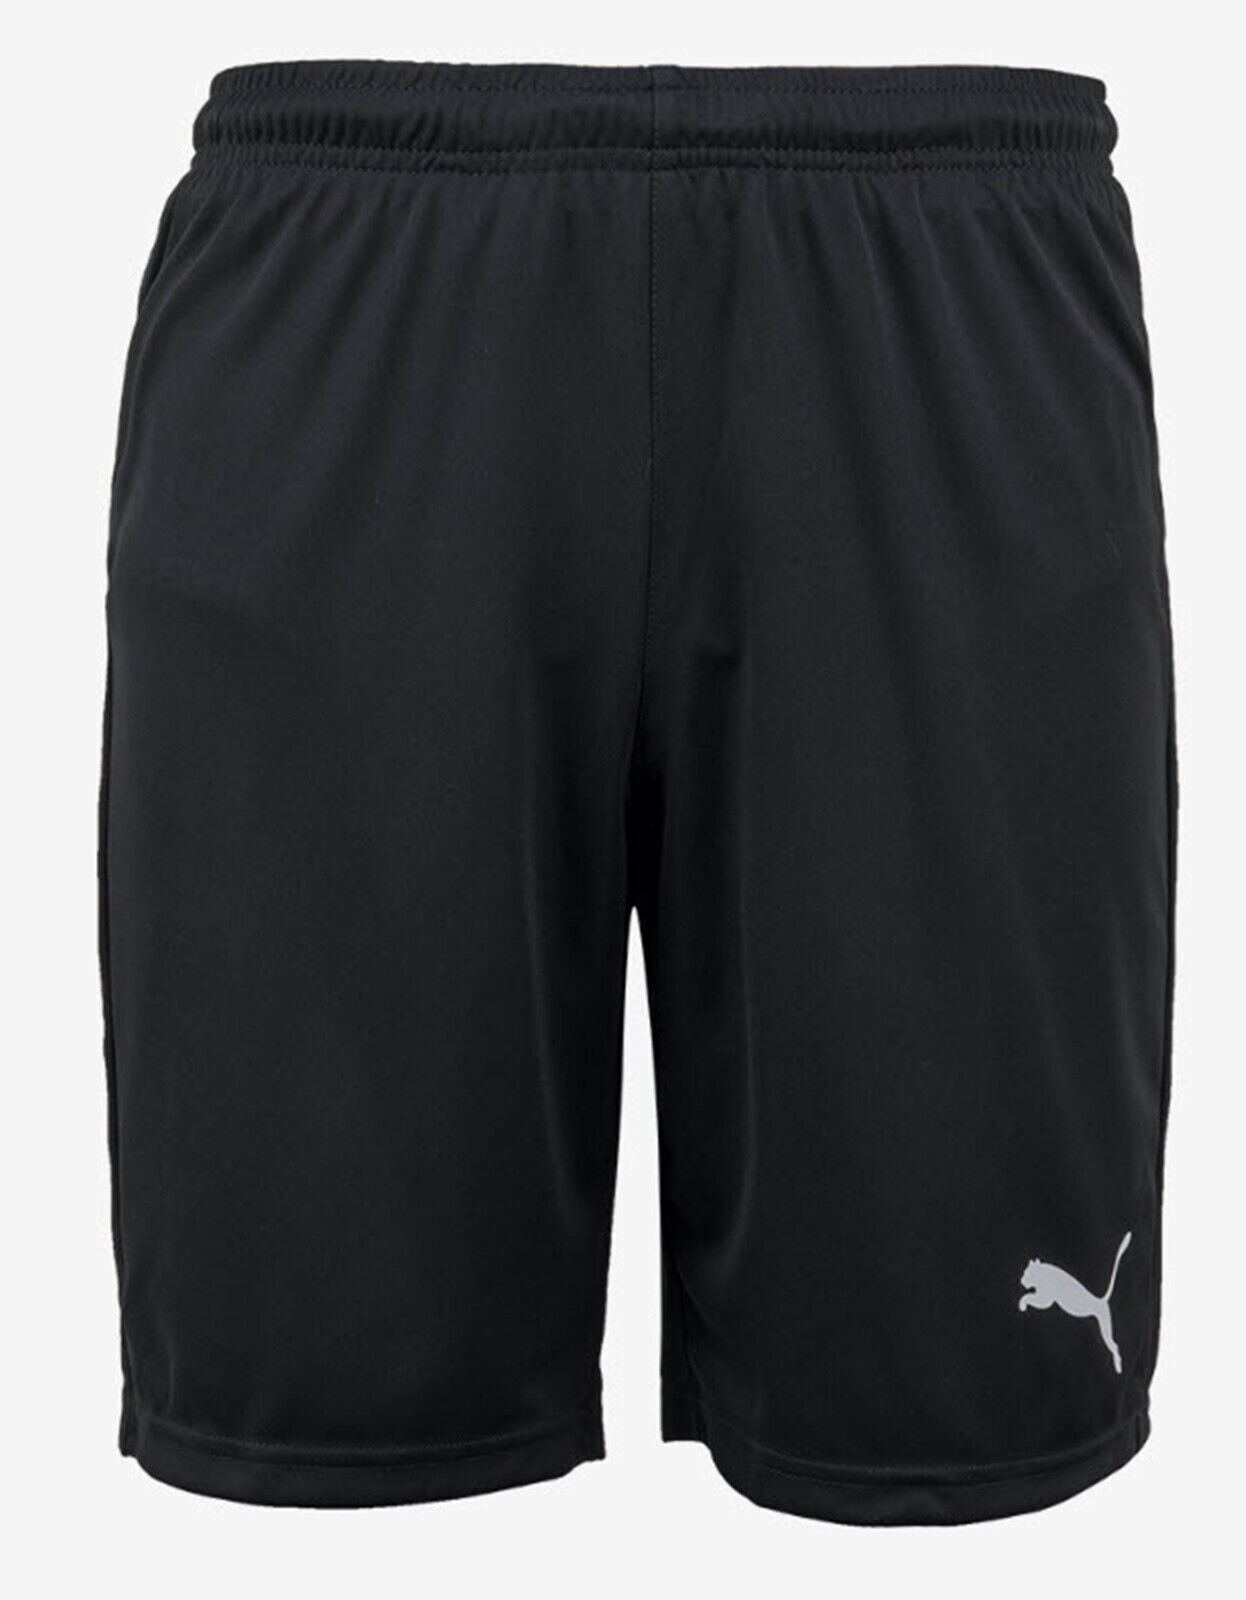 Puma Men LIGA Core Shorts Pants Training Black Soccer Running GYM Pant  70429003 | eBay